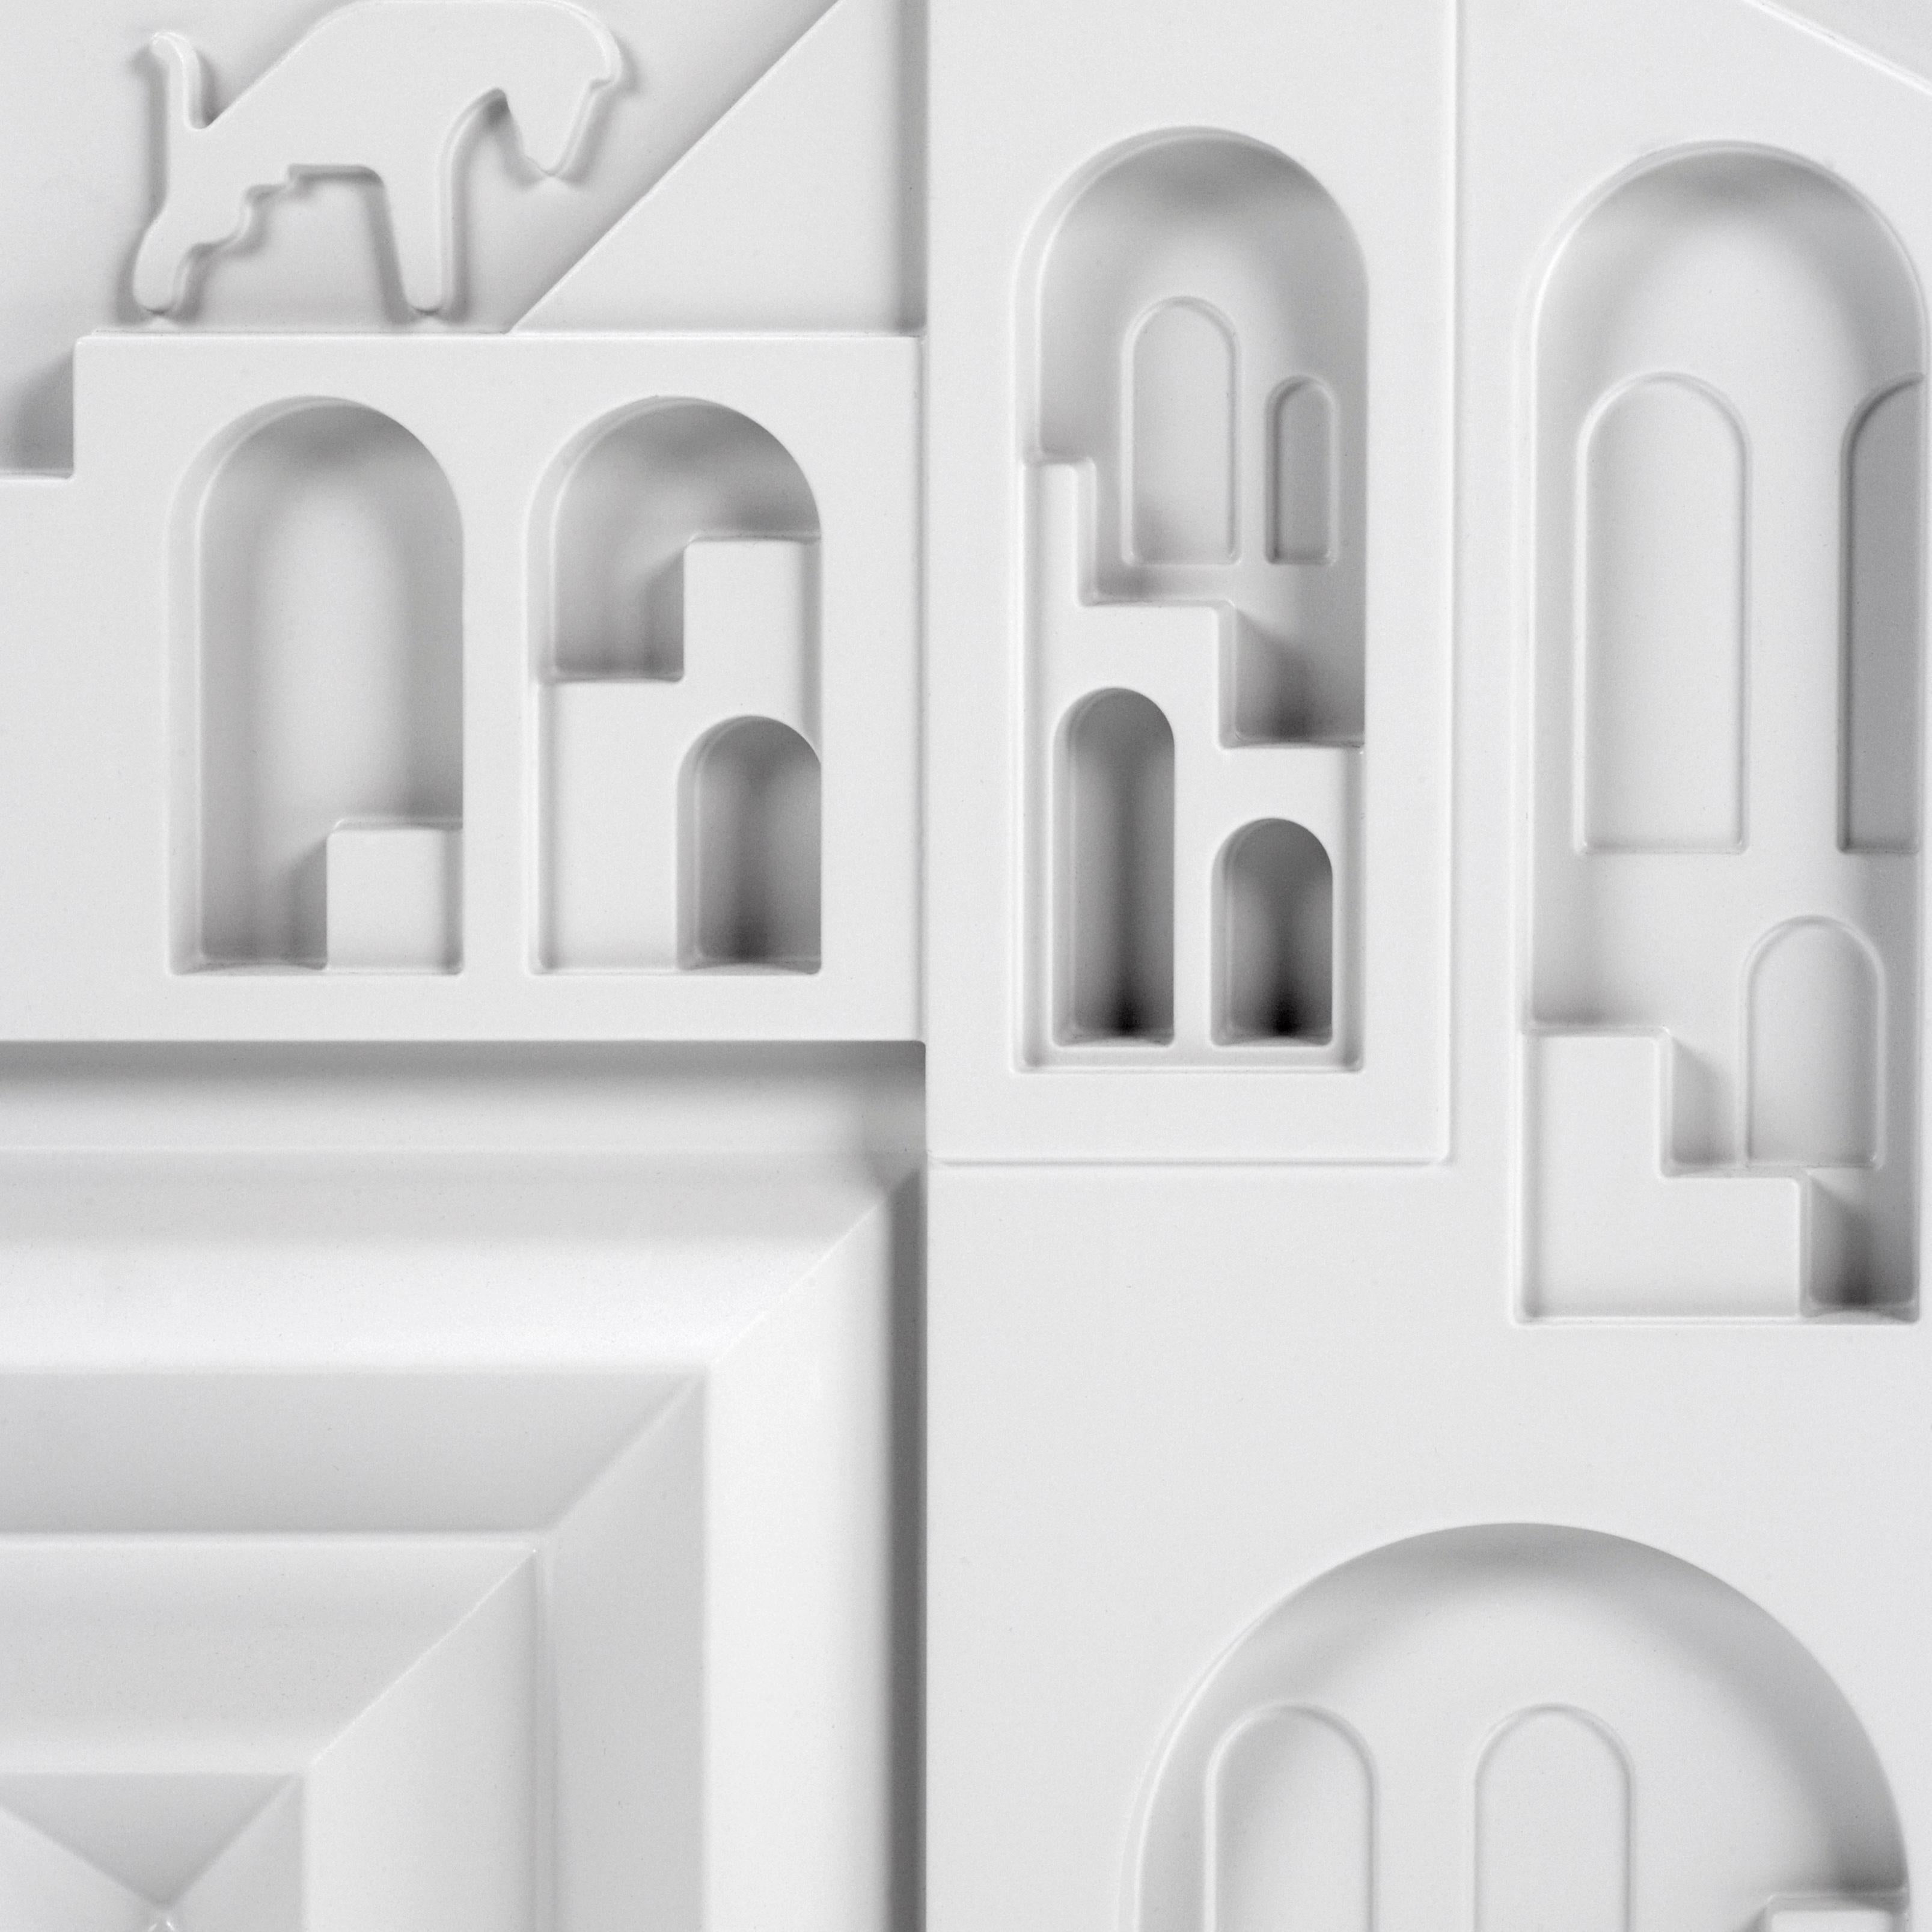 Spanish Antoine Et Manuel Contemporary 'Tout Va Bien' White Cabinet for Bd Barcelona